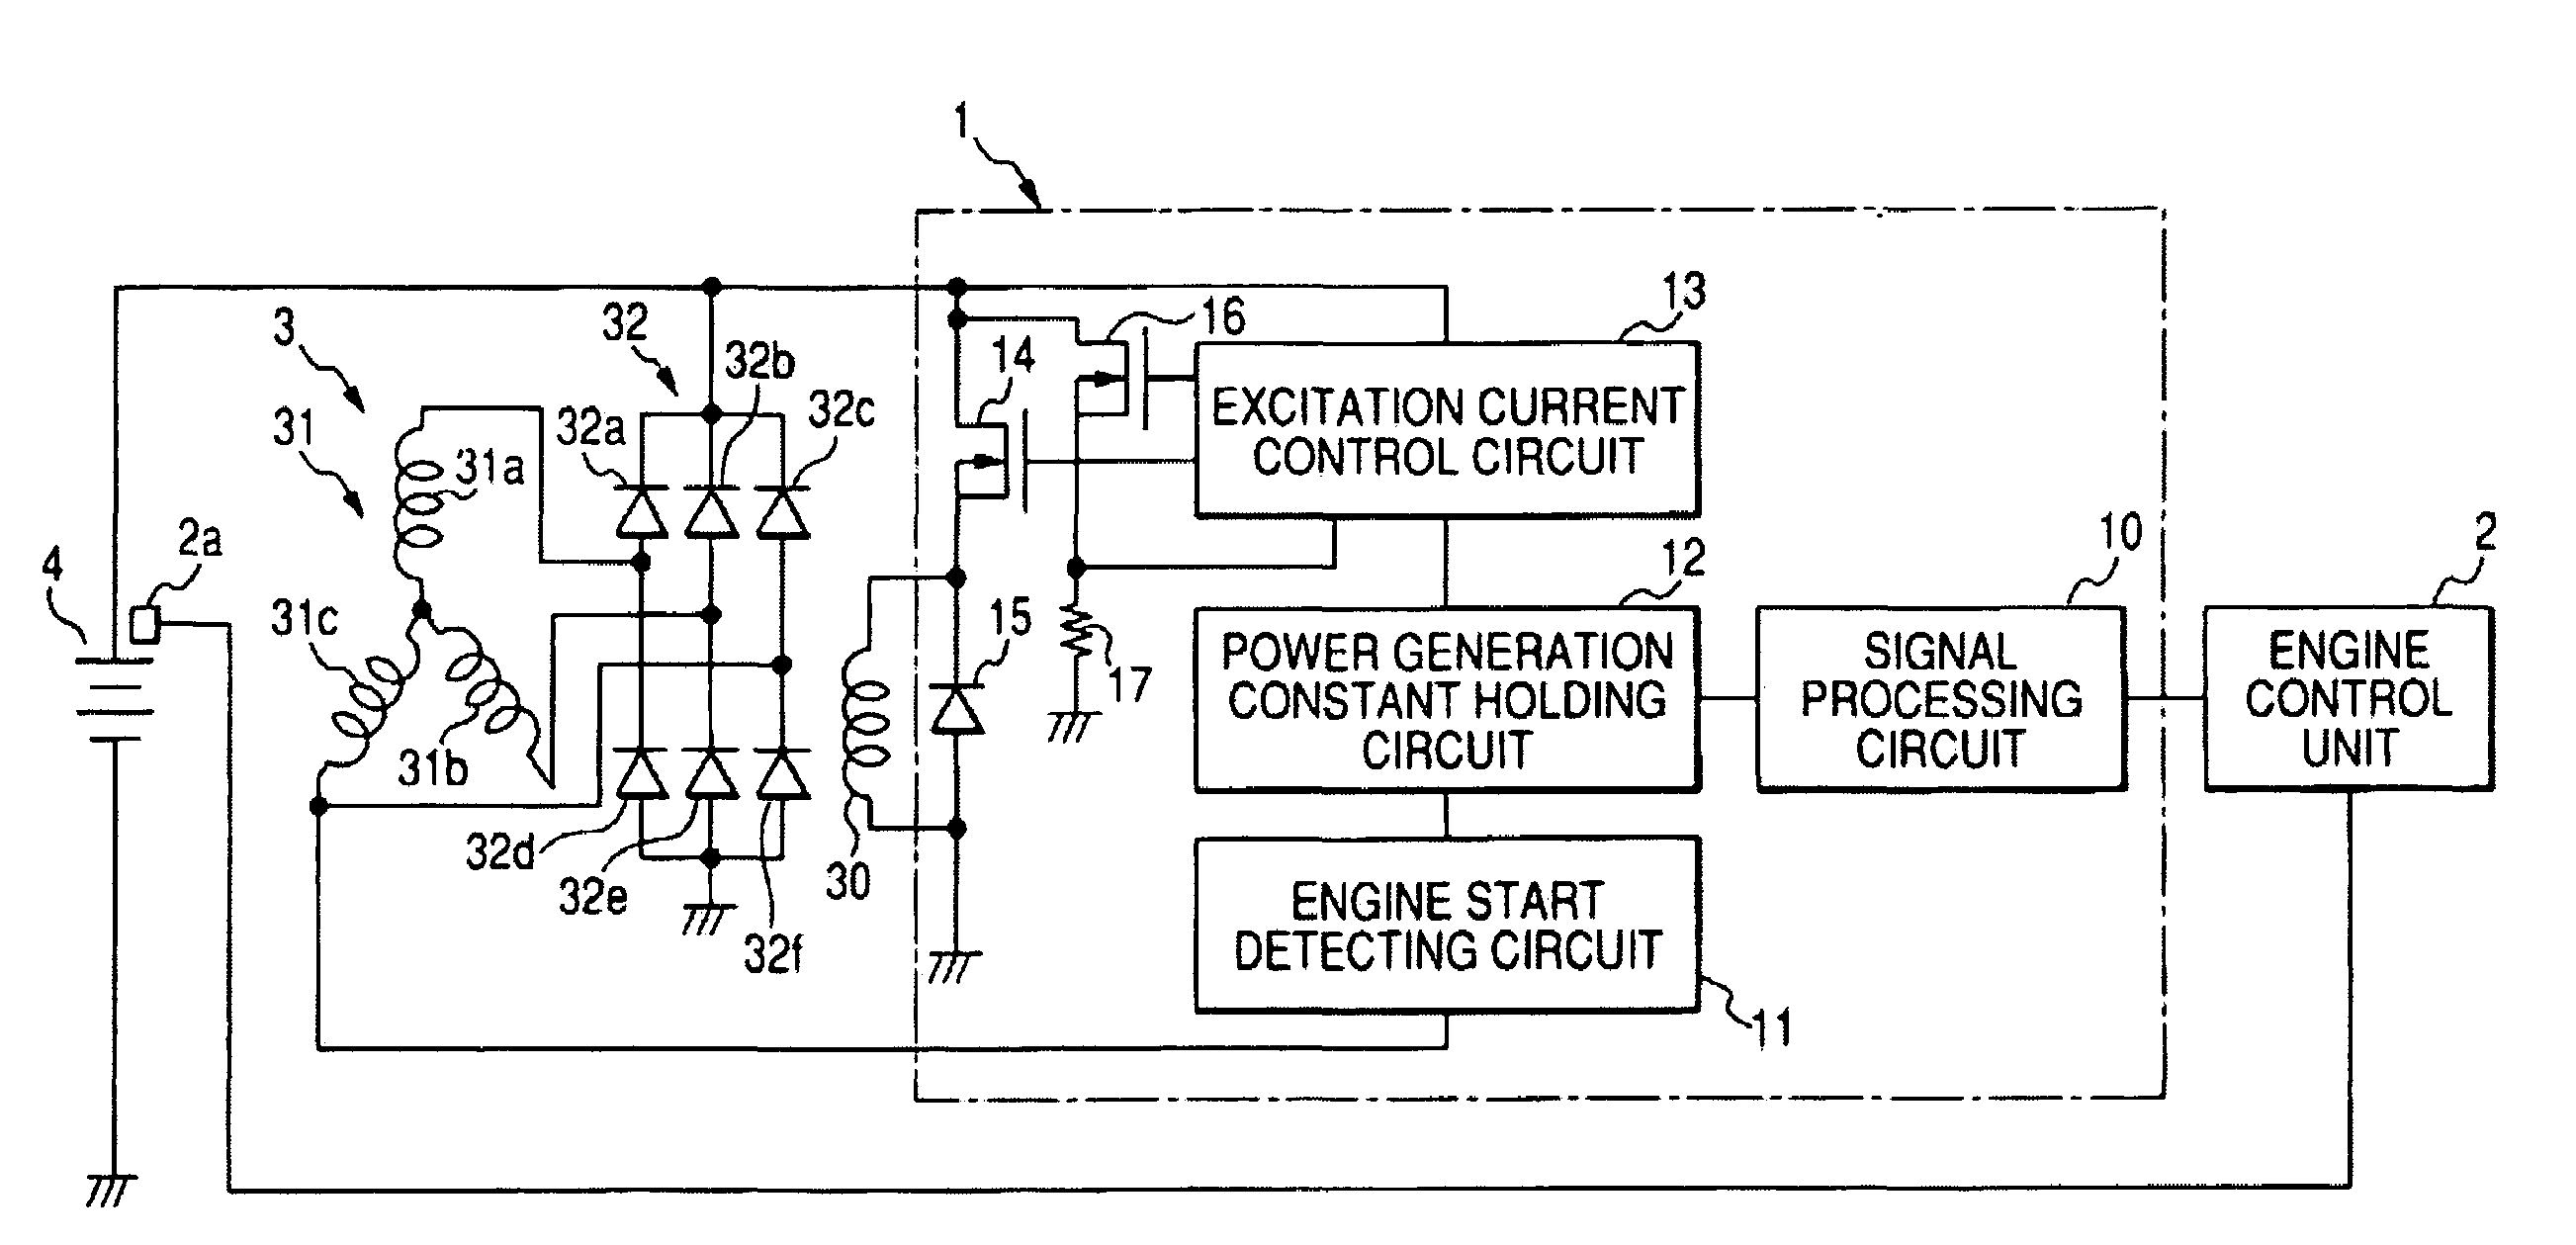 Power generation controller